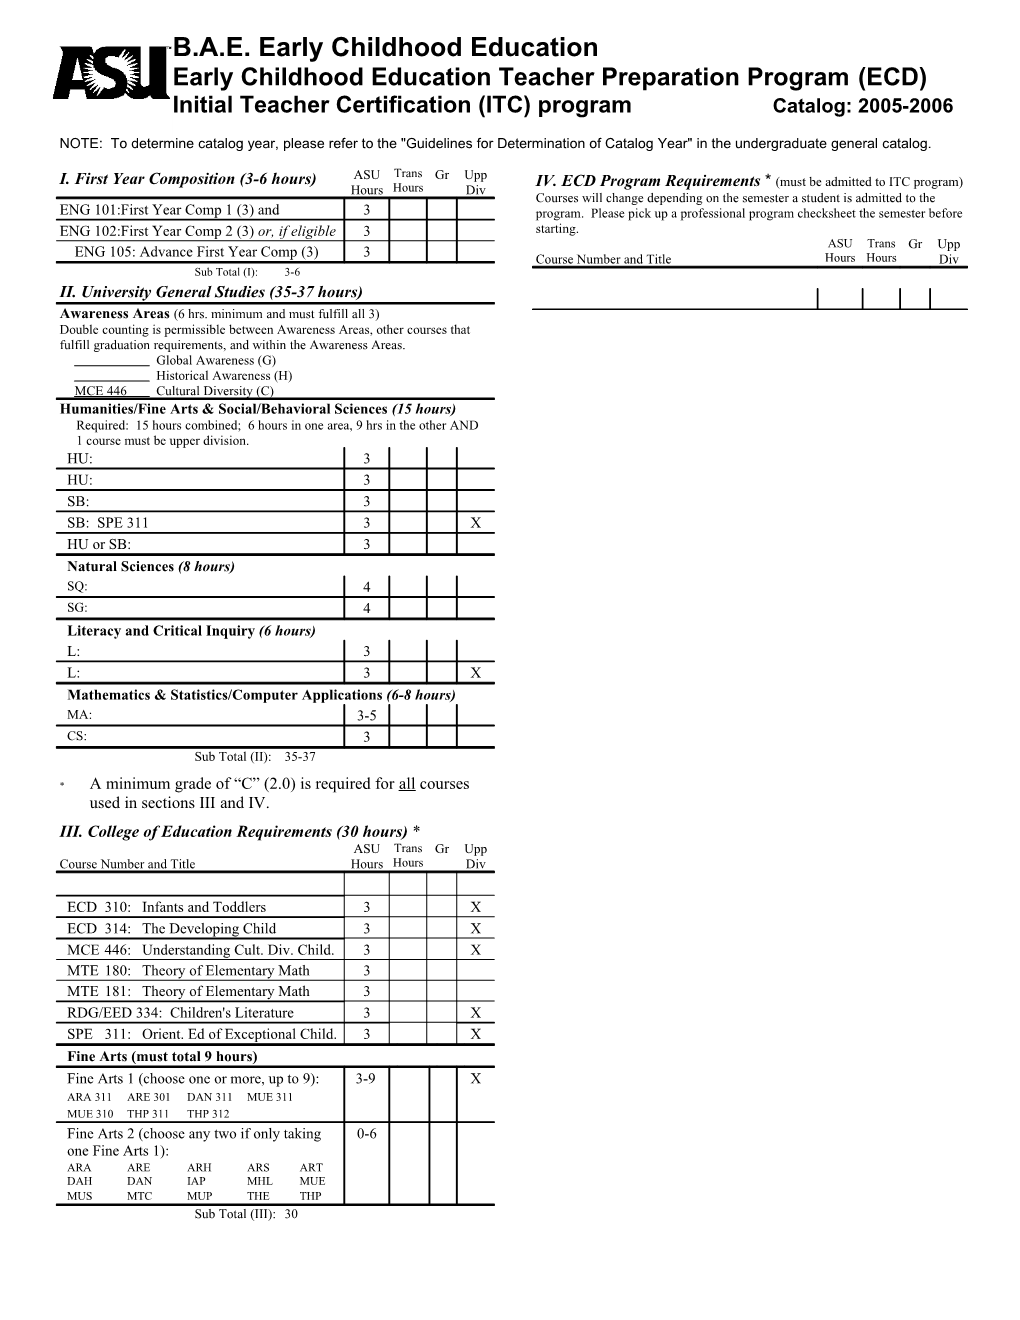 Curriculum Check Sheet (1999-2000 Catalog)